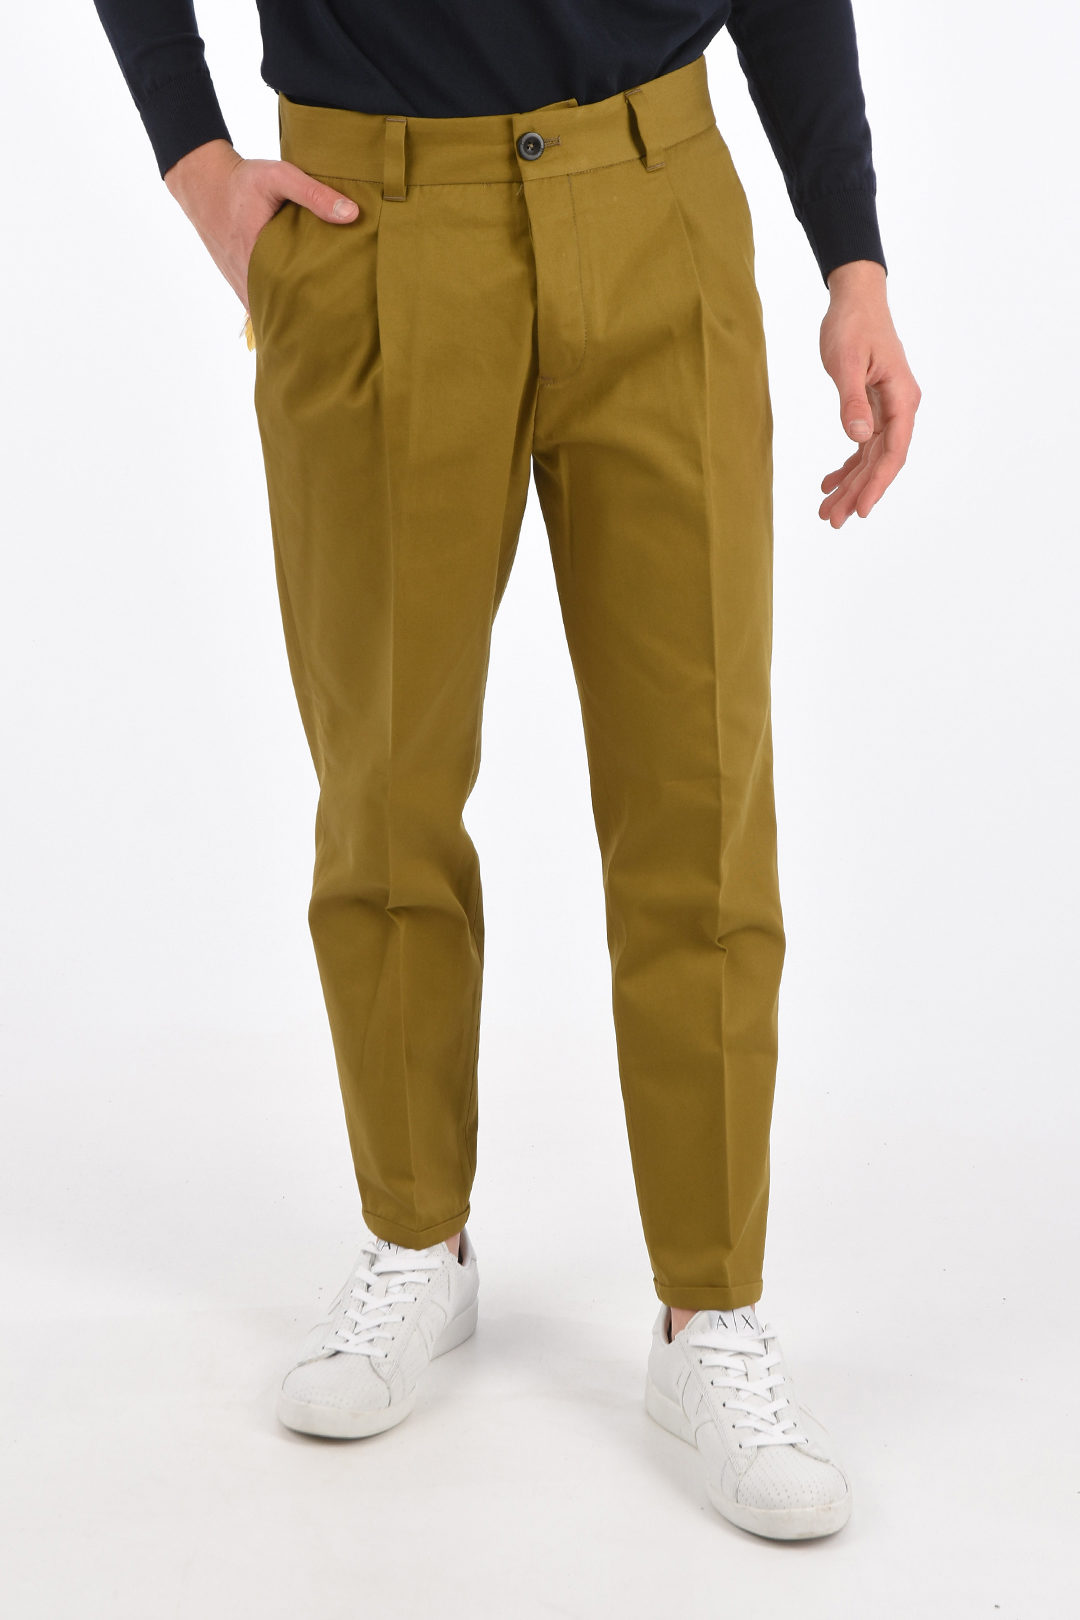 UK Mens Elasticated Waist Cargo Cuffed Pants Combat Work Joggers Pocket  Trousers  eBay